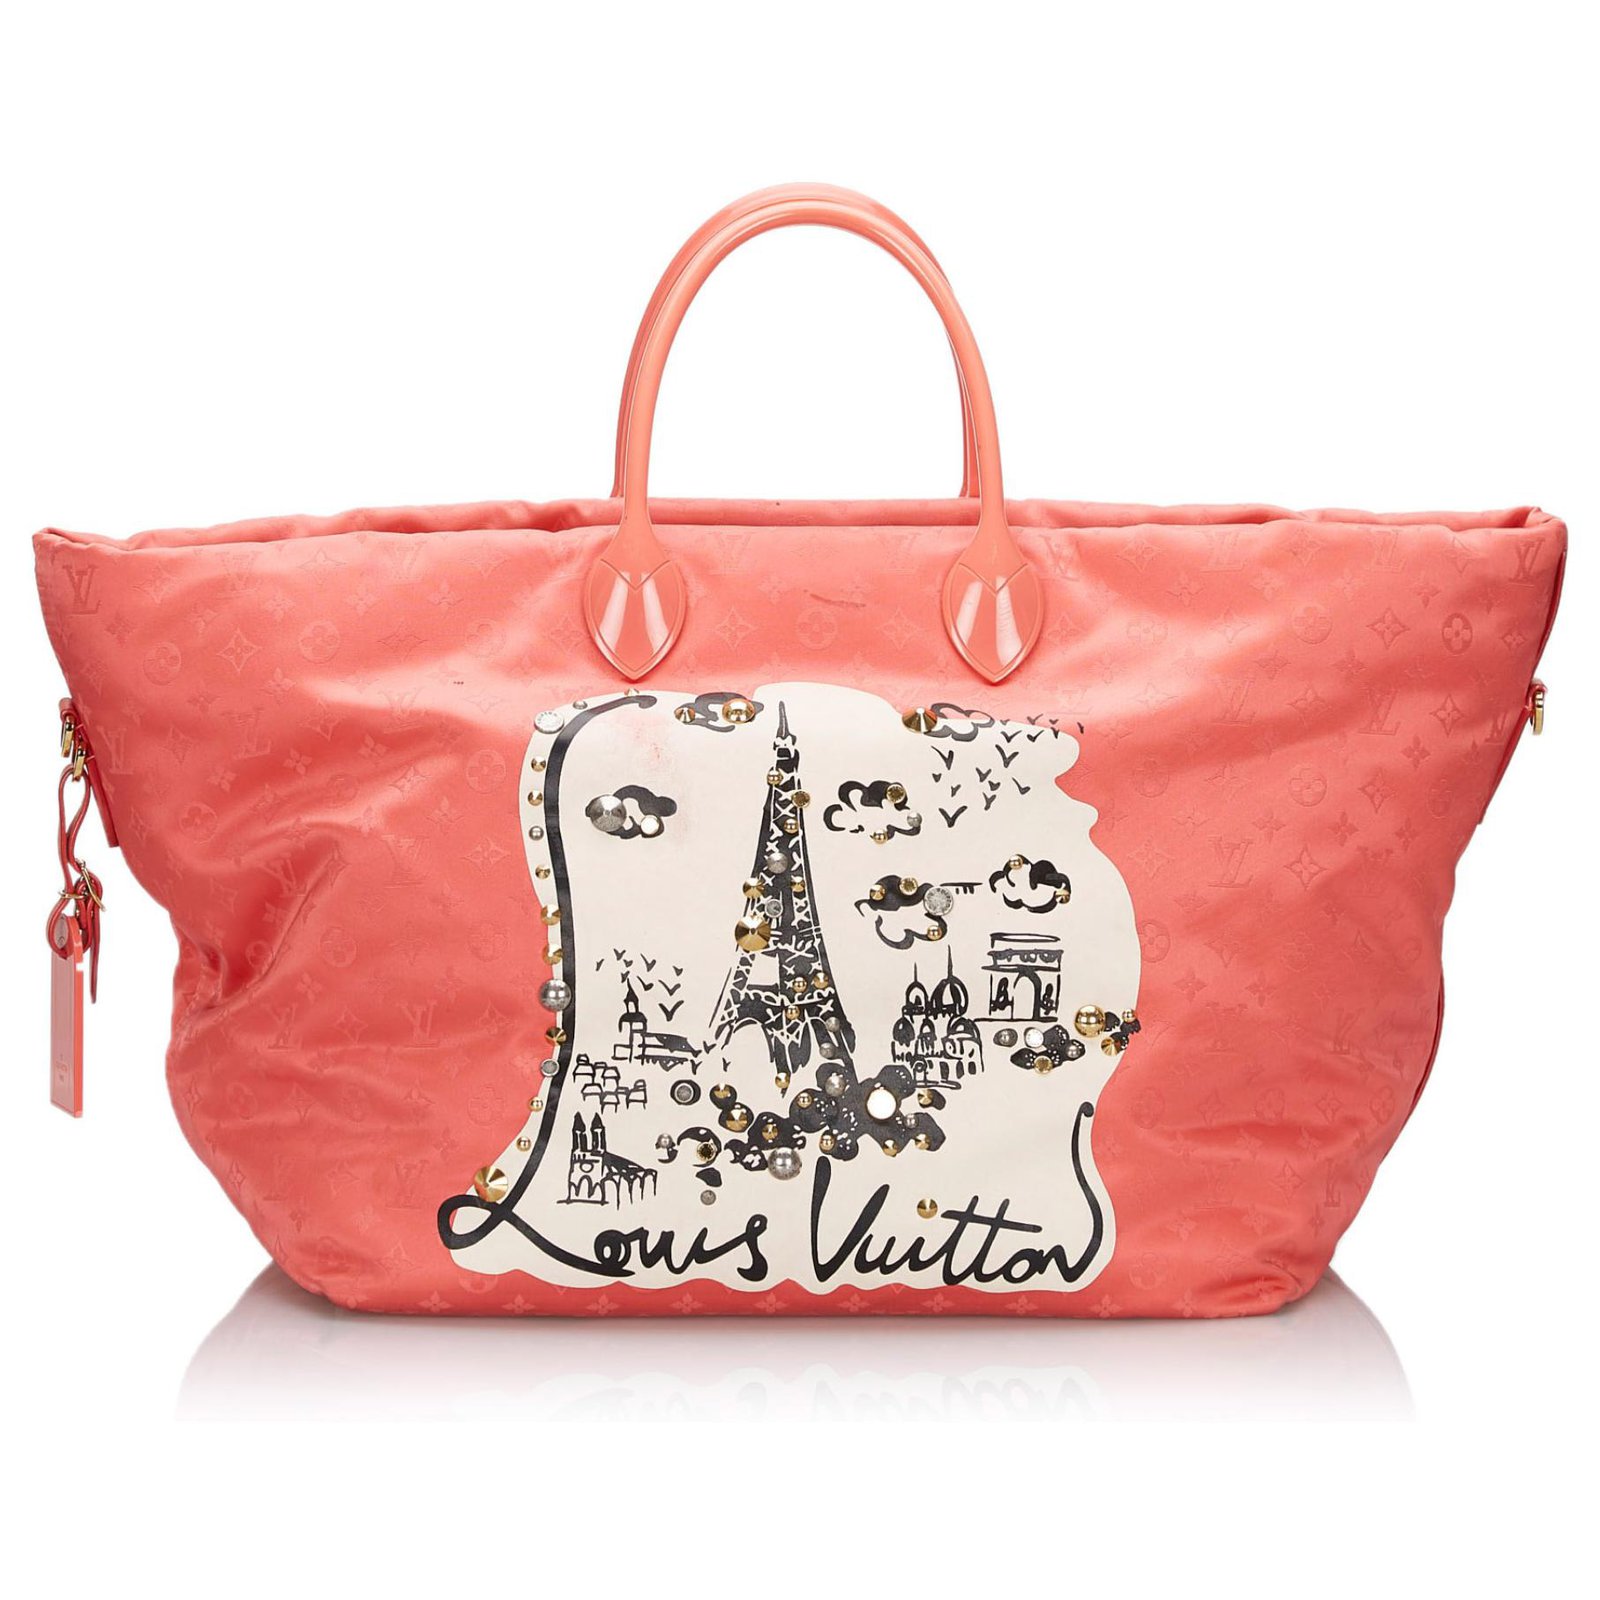 plastic around handles of Louis Vuitton bags